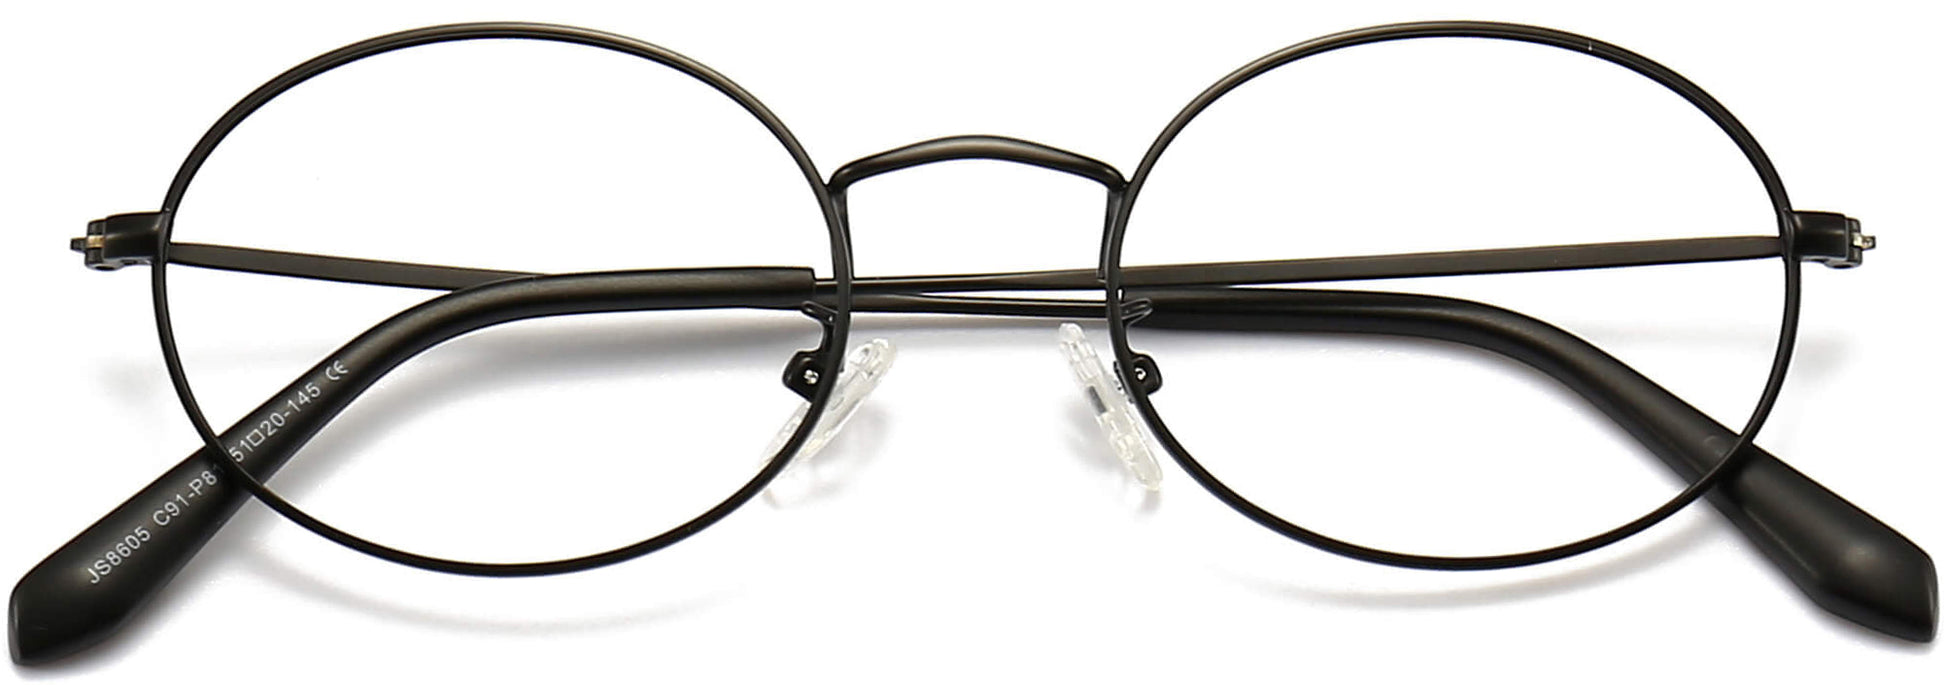 Dariel Round Black Eyeglasses from ANRRI, closed view